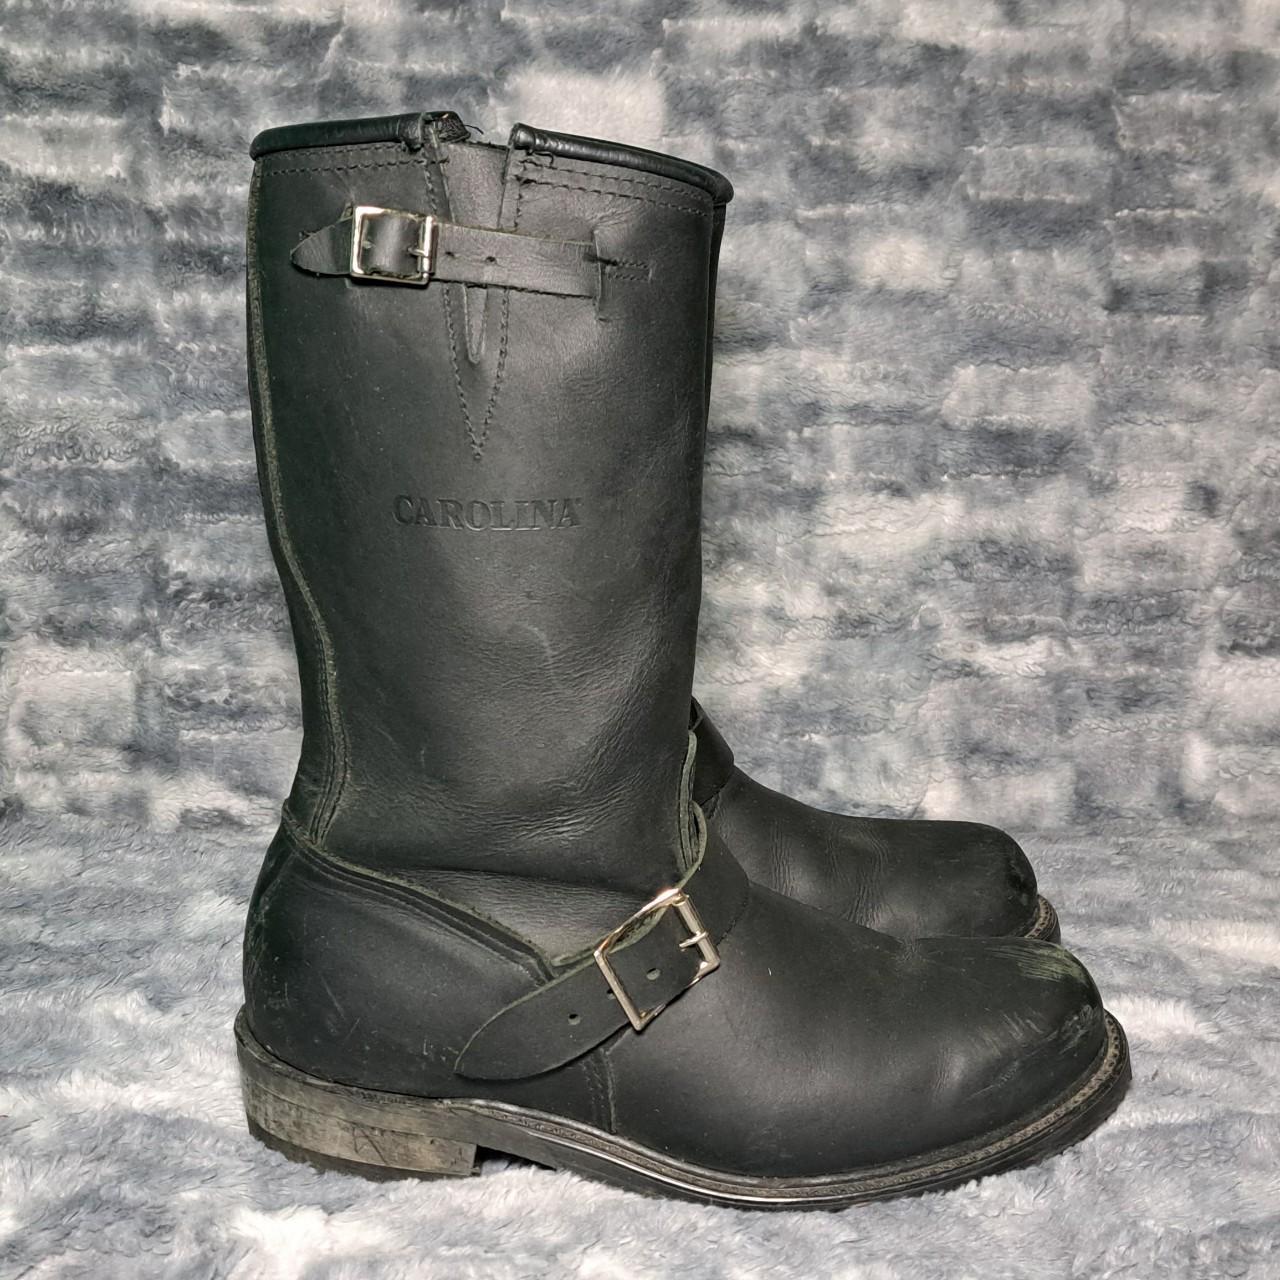 Carolina 902 Engineer Boots Size: 8.5 Condition:... - Depop